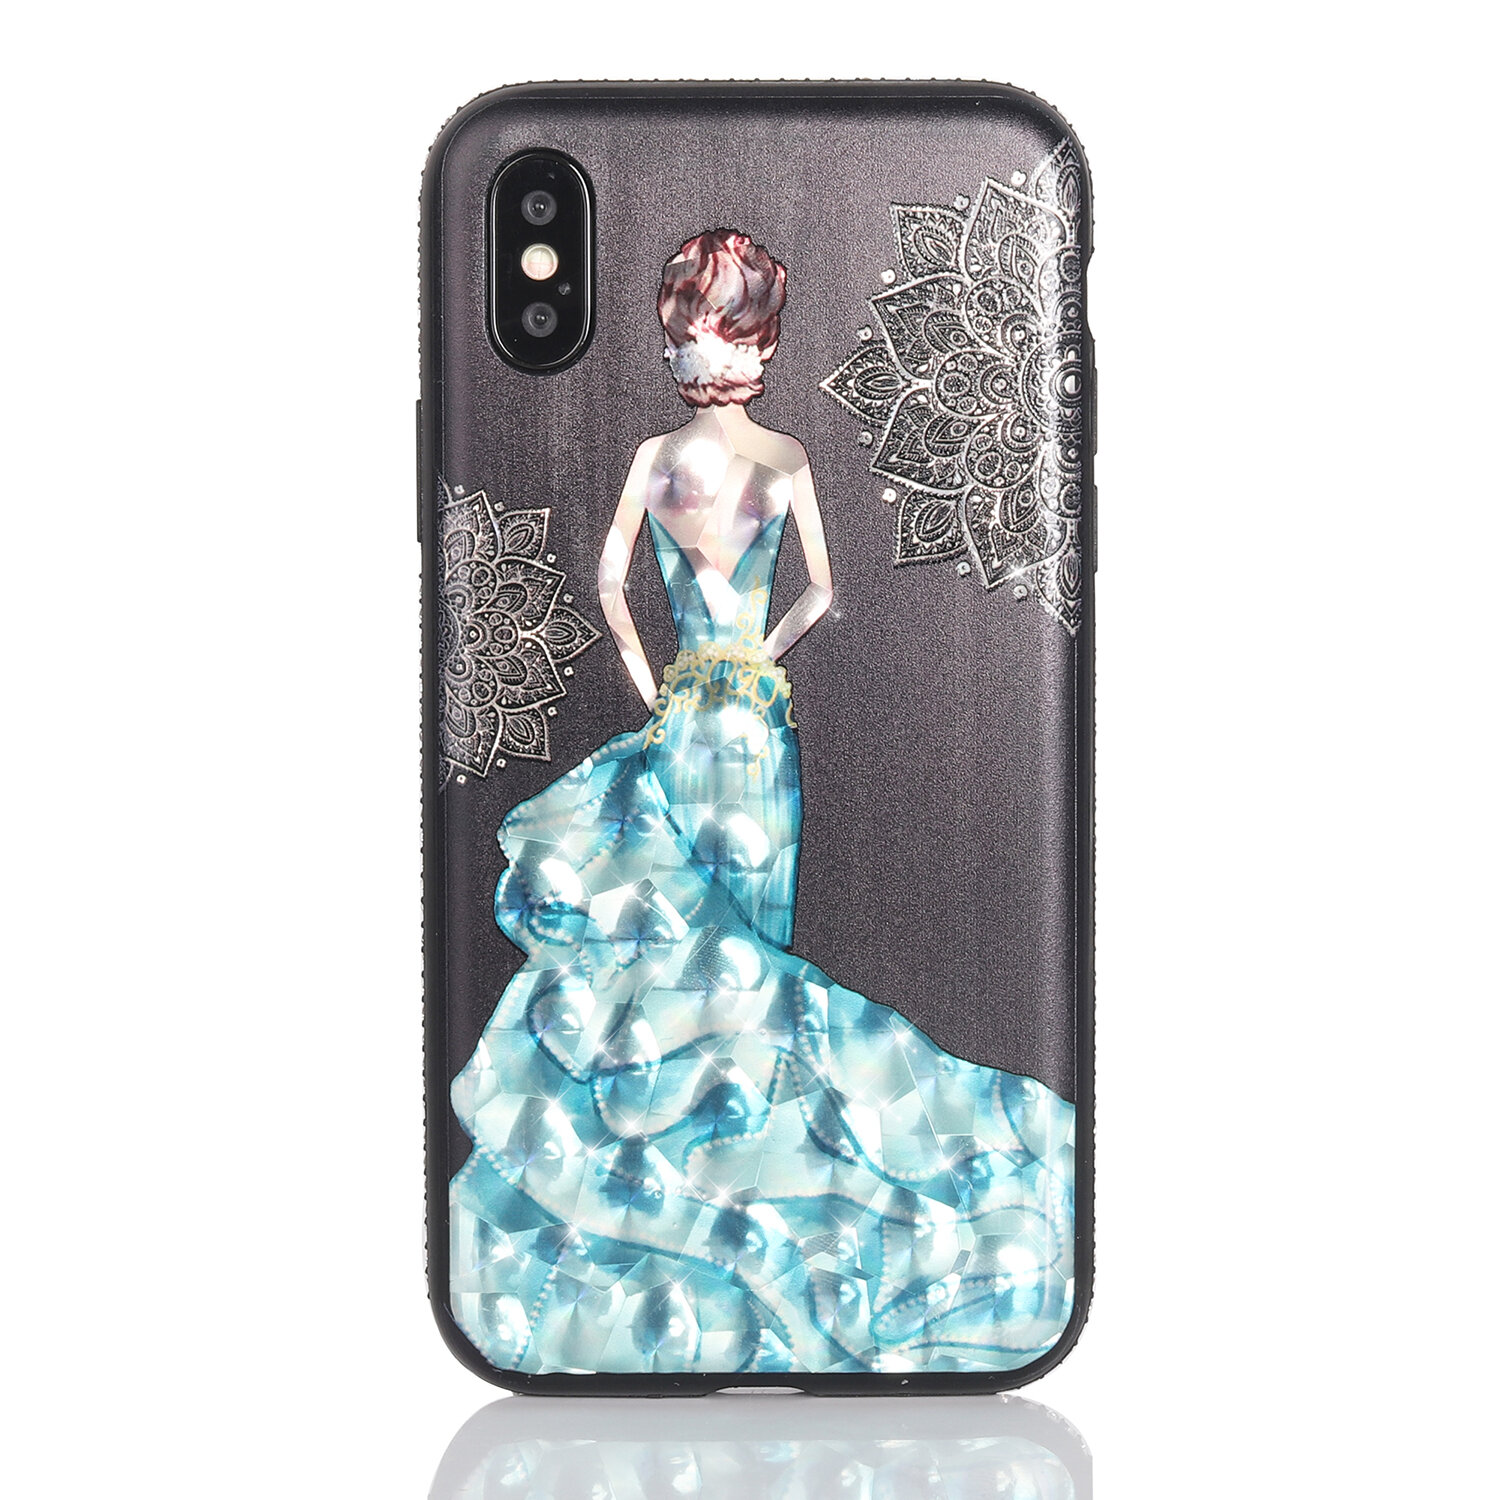 Bakeey 3D Painting Protective Case For iPhone X/8/8 Plus/7/7 Plus/6s Plus/6 Plus/6s/6 Blue Dress Glitter Bling COD